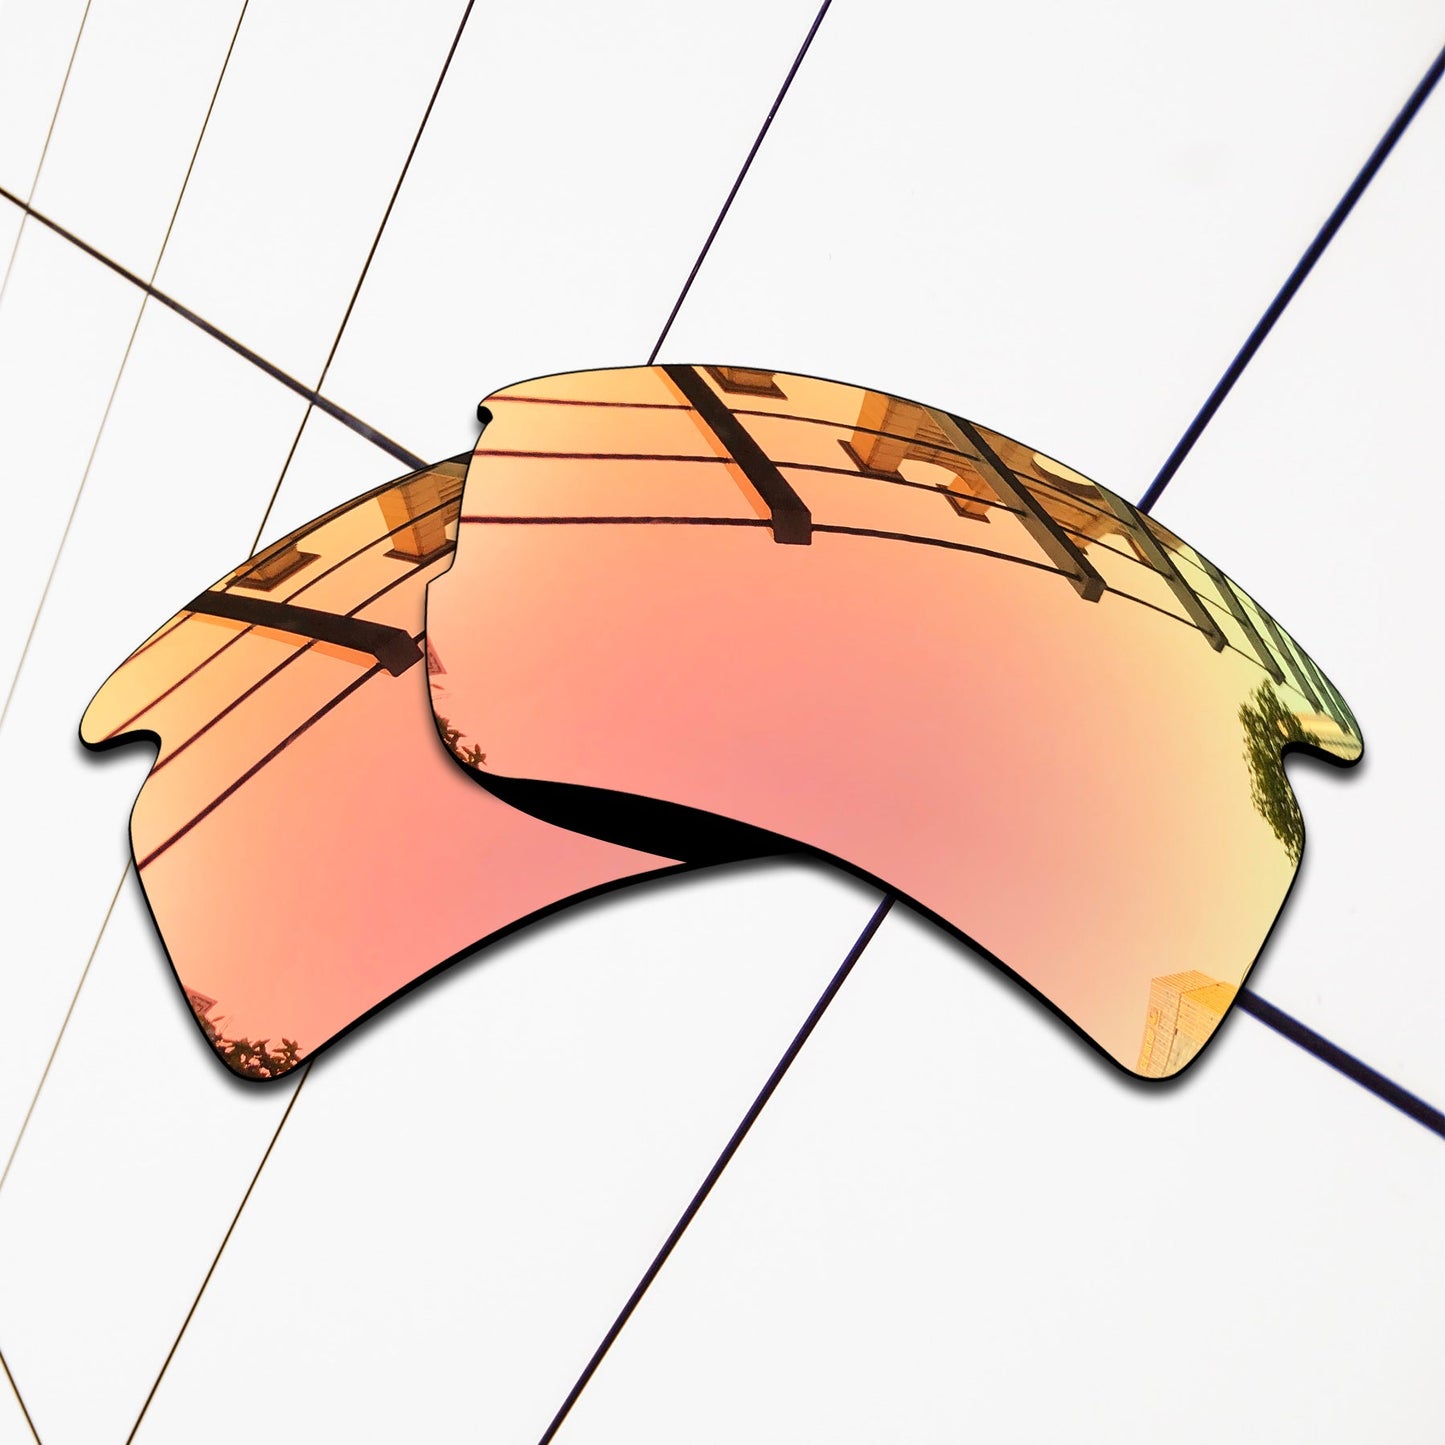 Polarized Replacement Lenses for Oakley Flak 2.0 XL Sunglasses